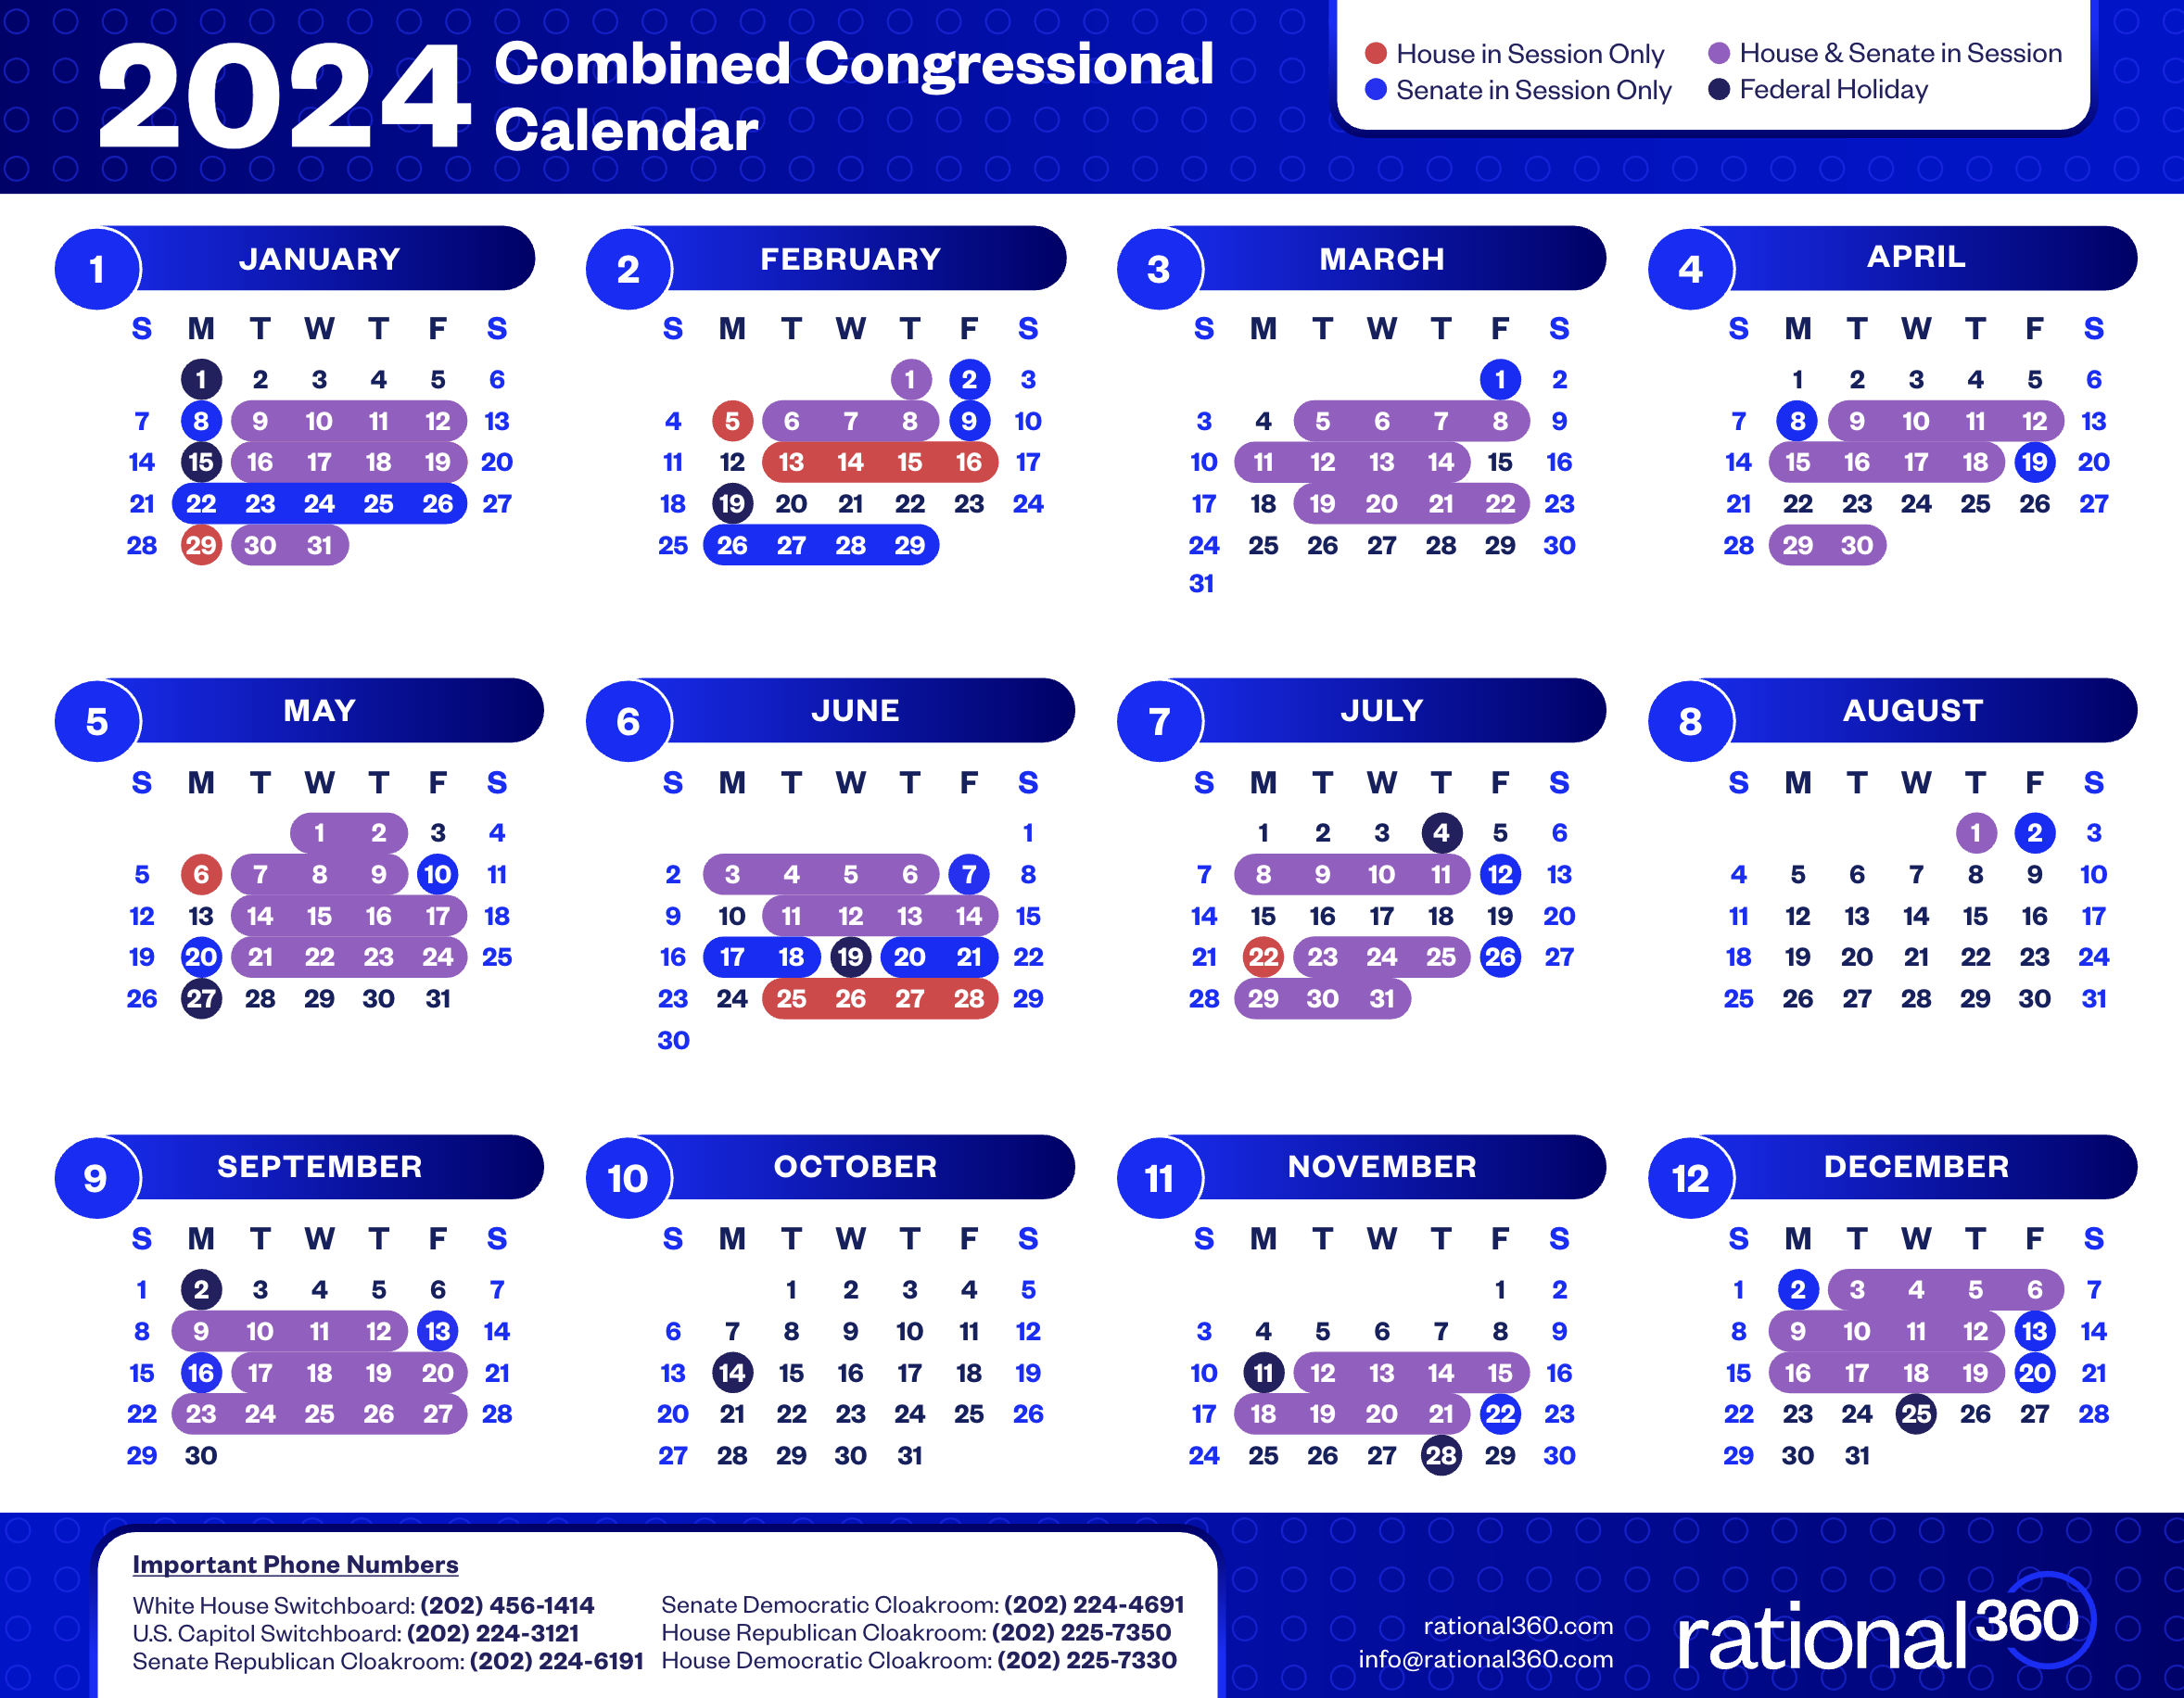 2024-combined-congressional-calendar-rational-360